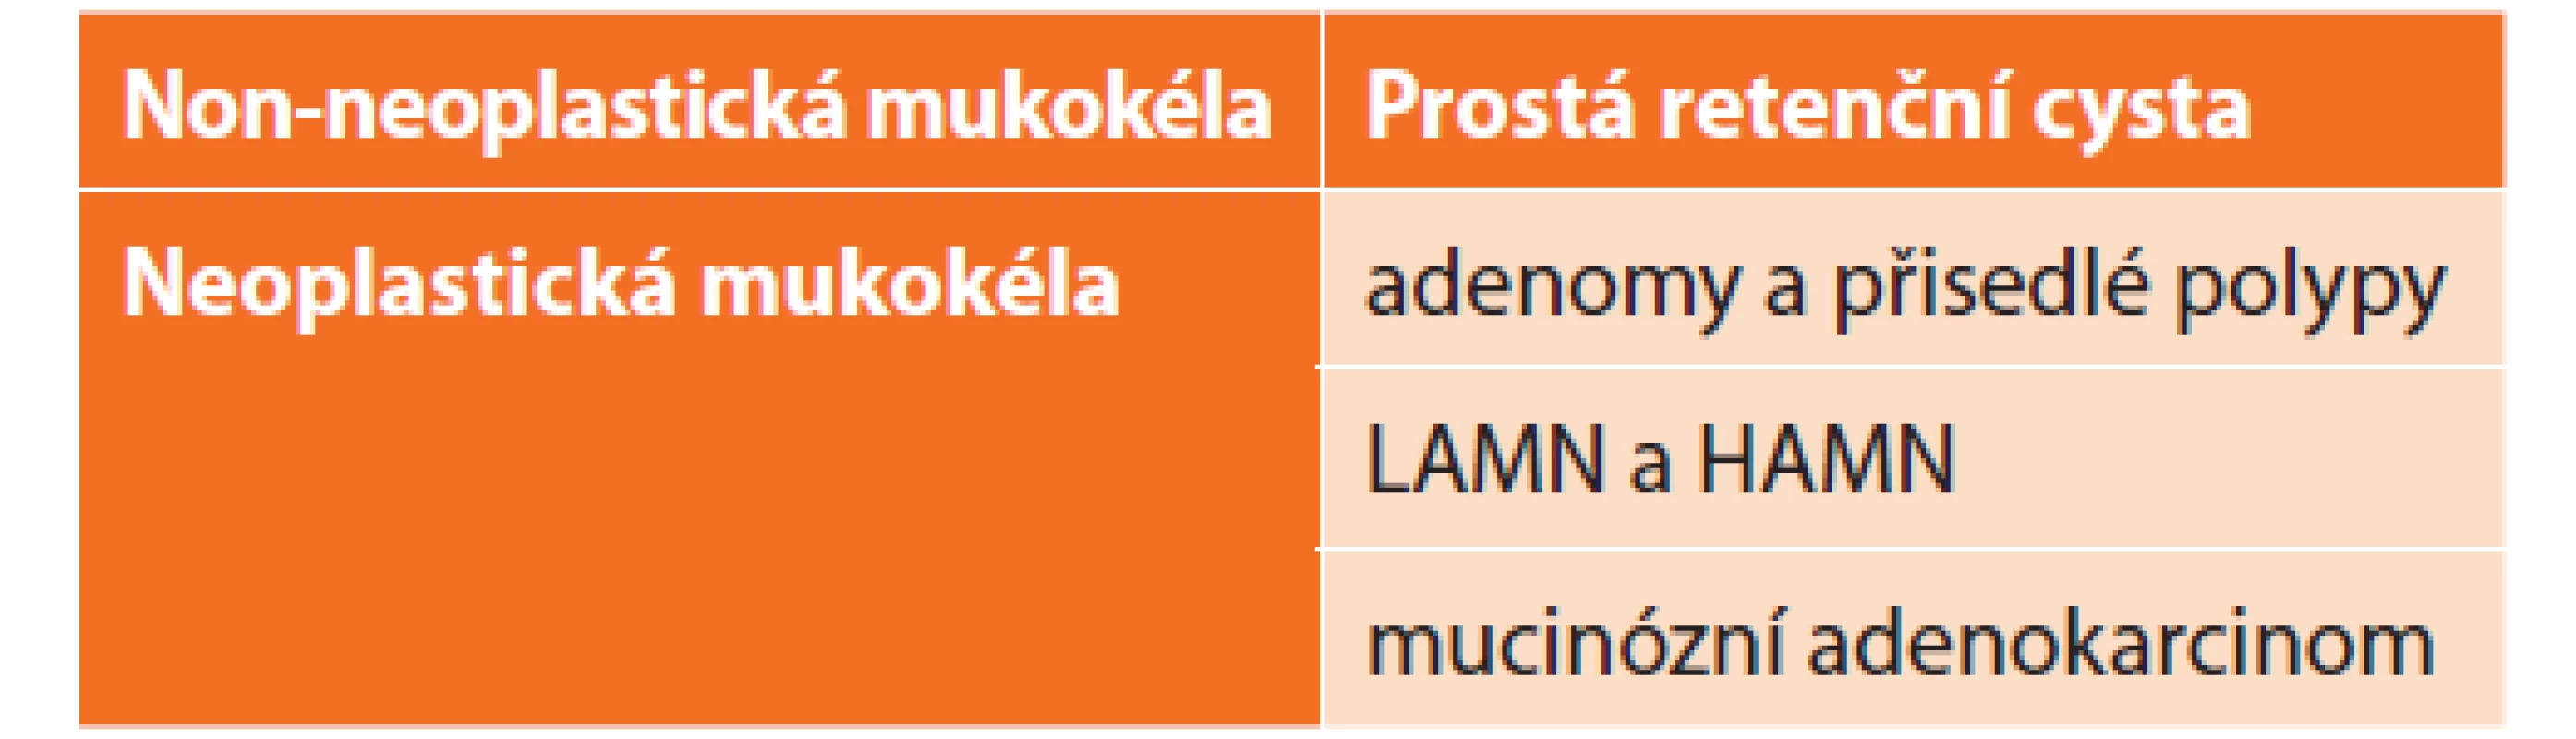 Histologická klasifikace mukokély apendixu<br>
Tab. 1: Appendiceal mucocele histological classification